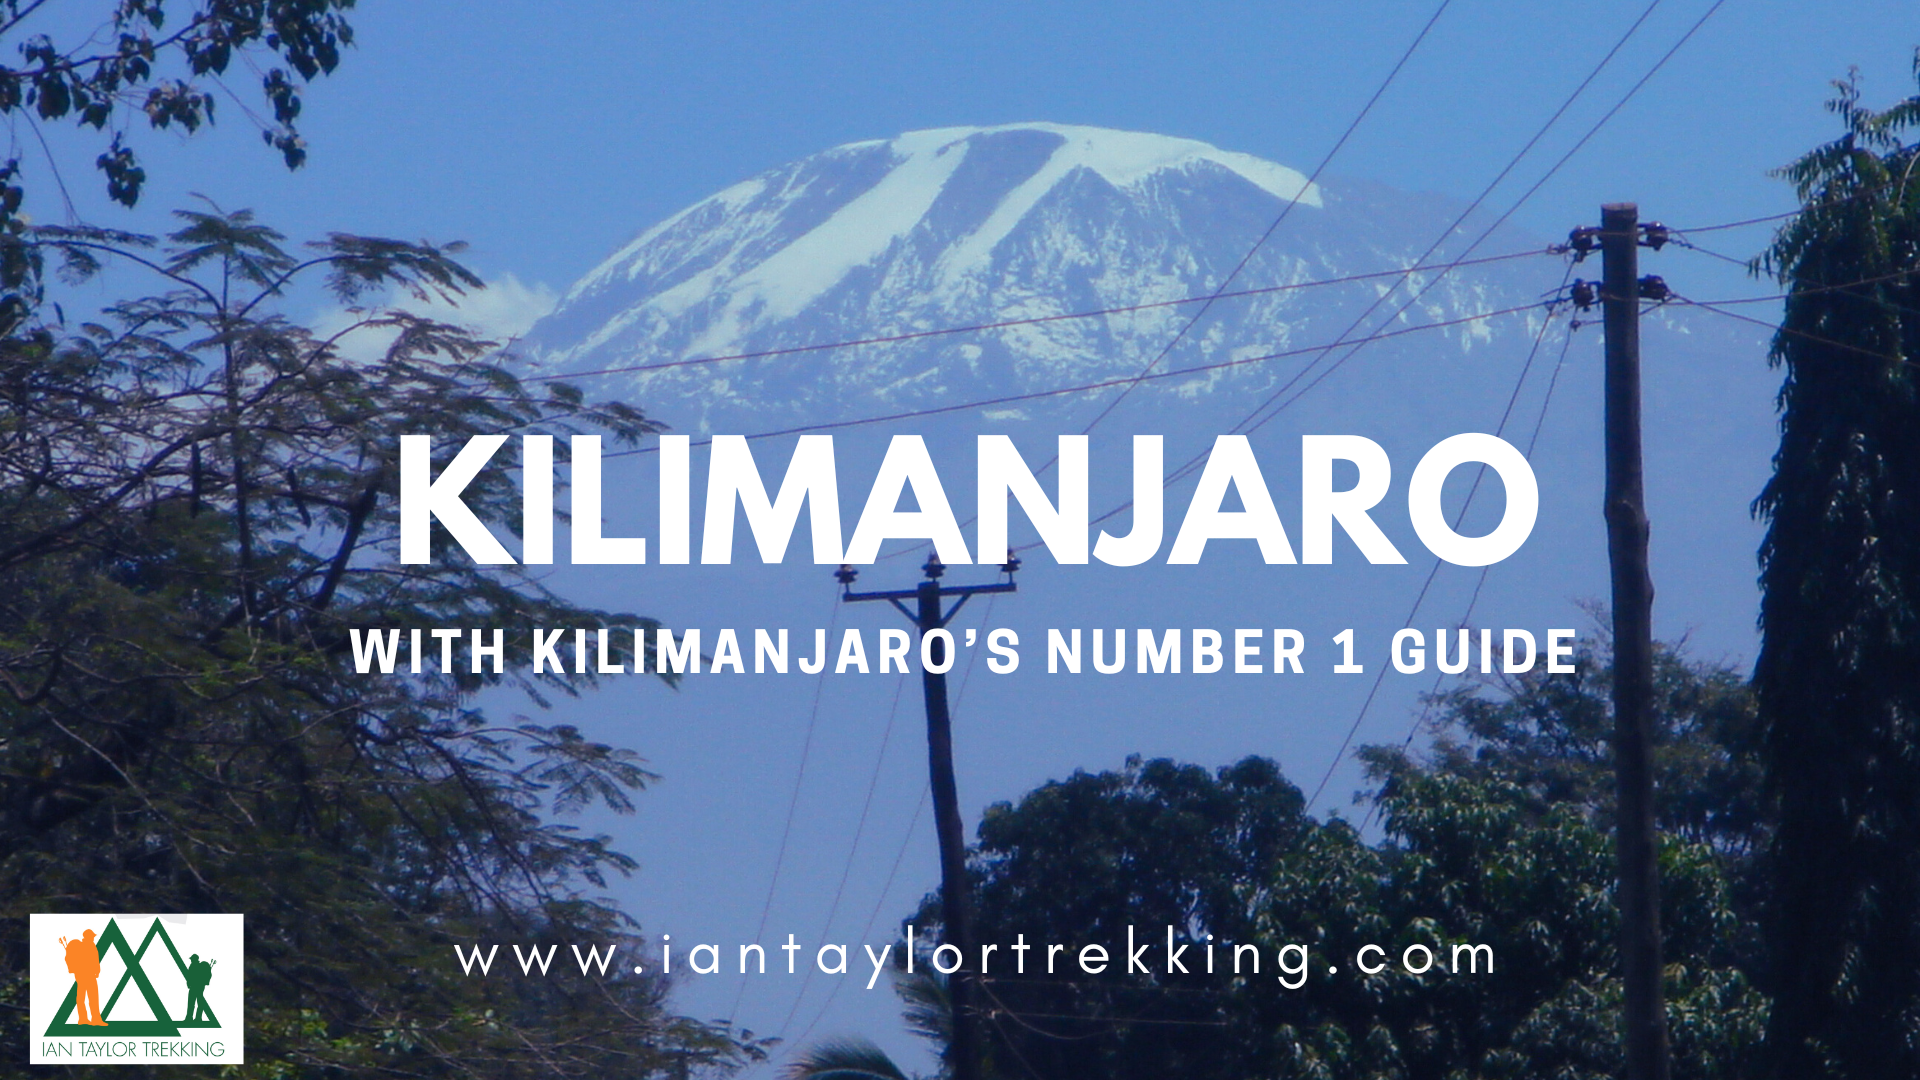 8 days on Mount Kilimanjaro